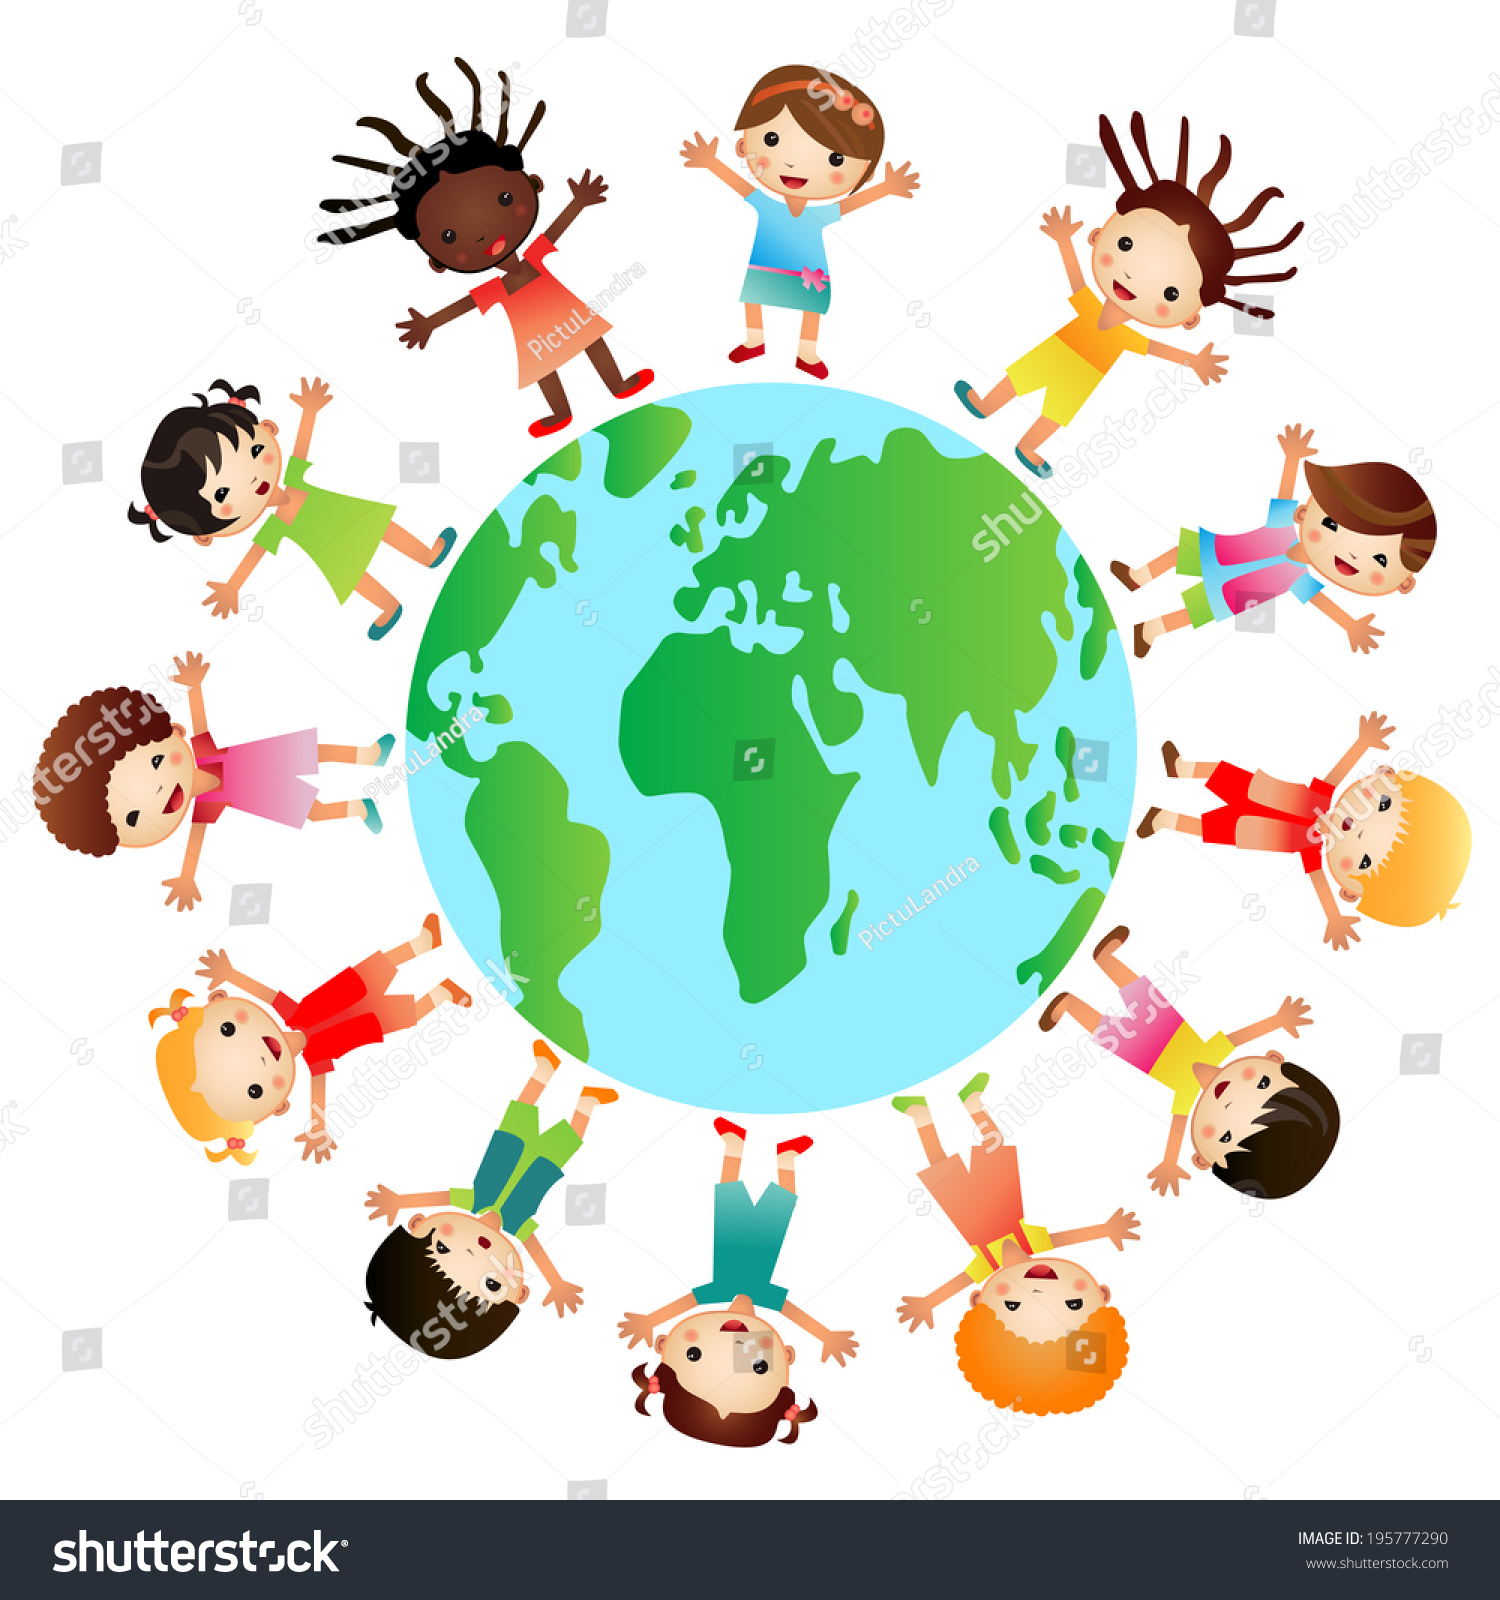 Multicultural Children On Planet Earth Cultural Stock Illustration 195777290